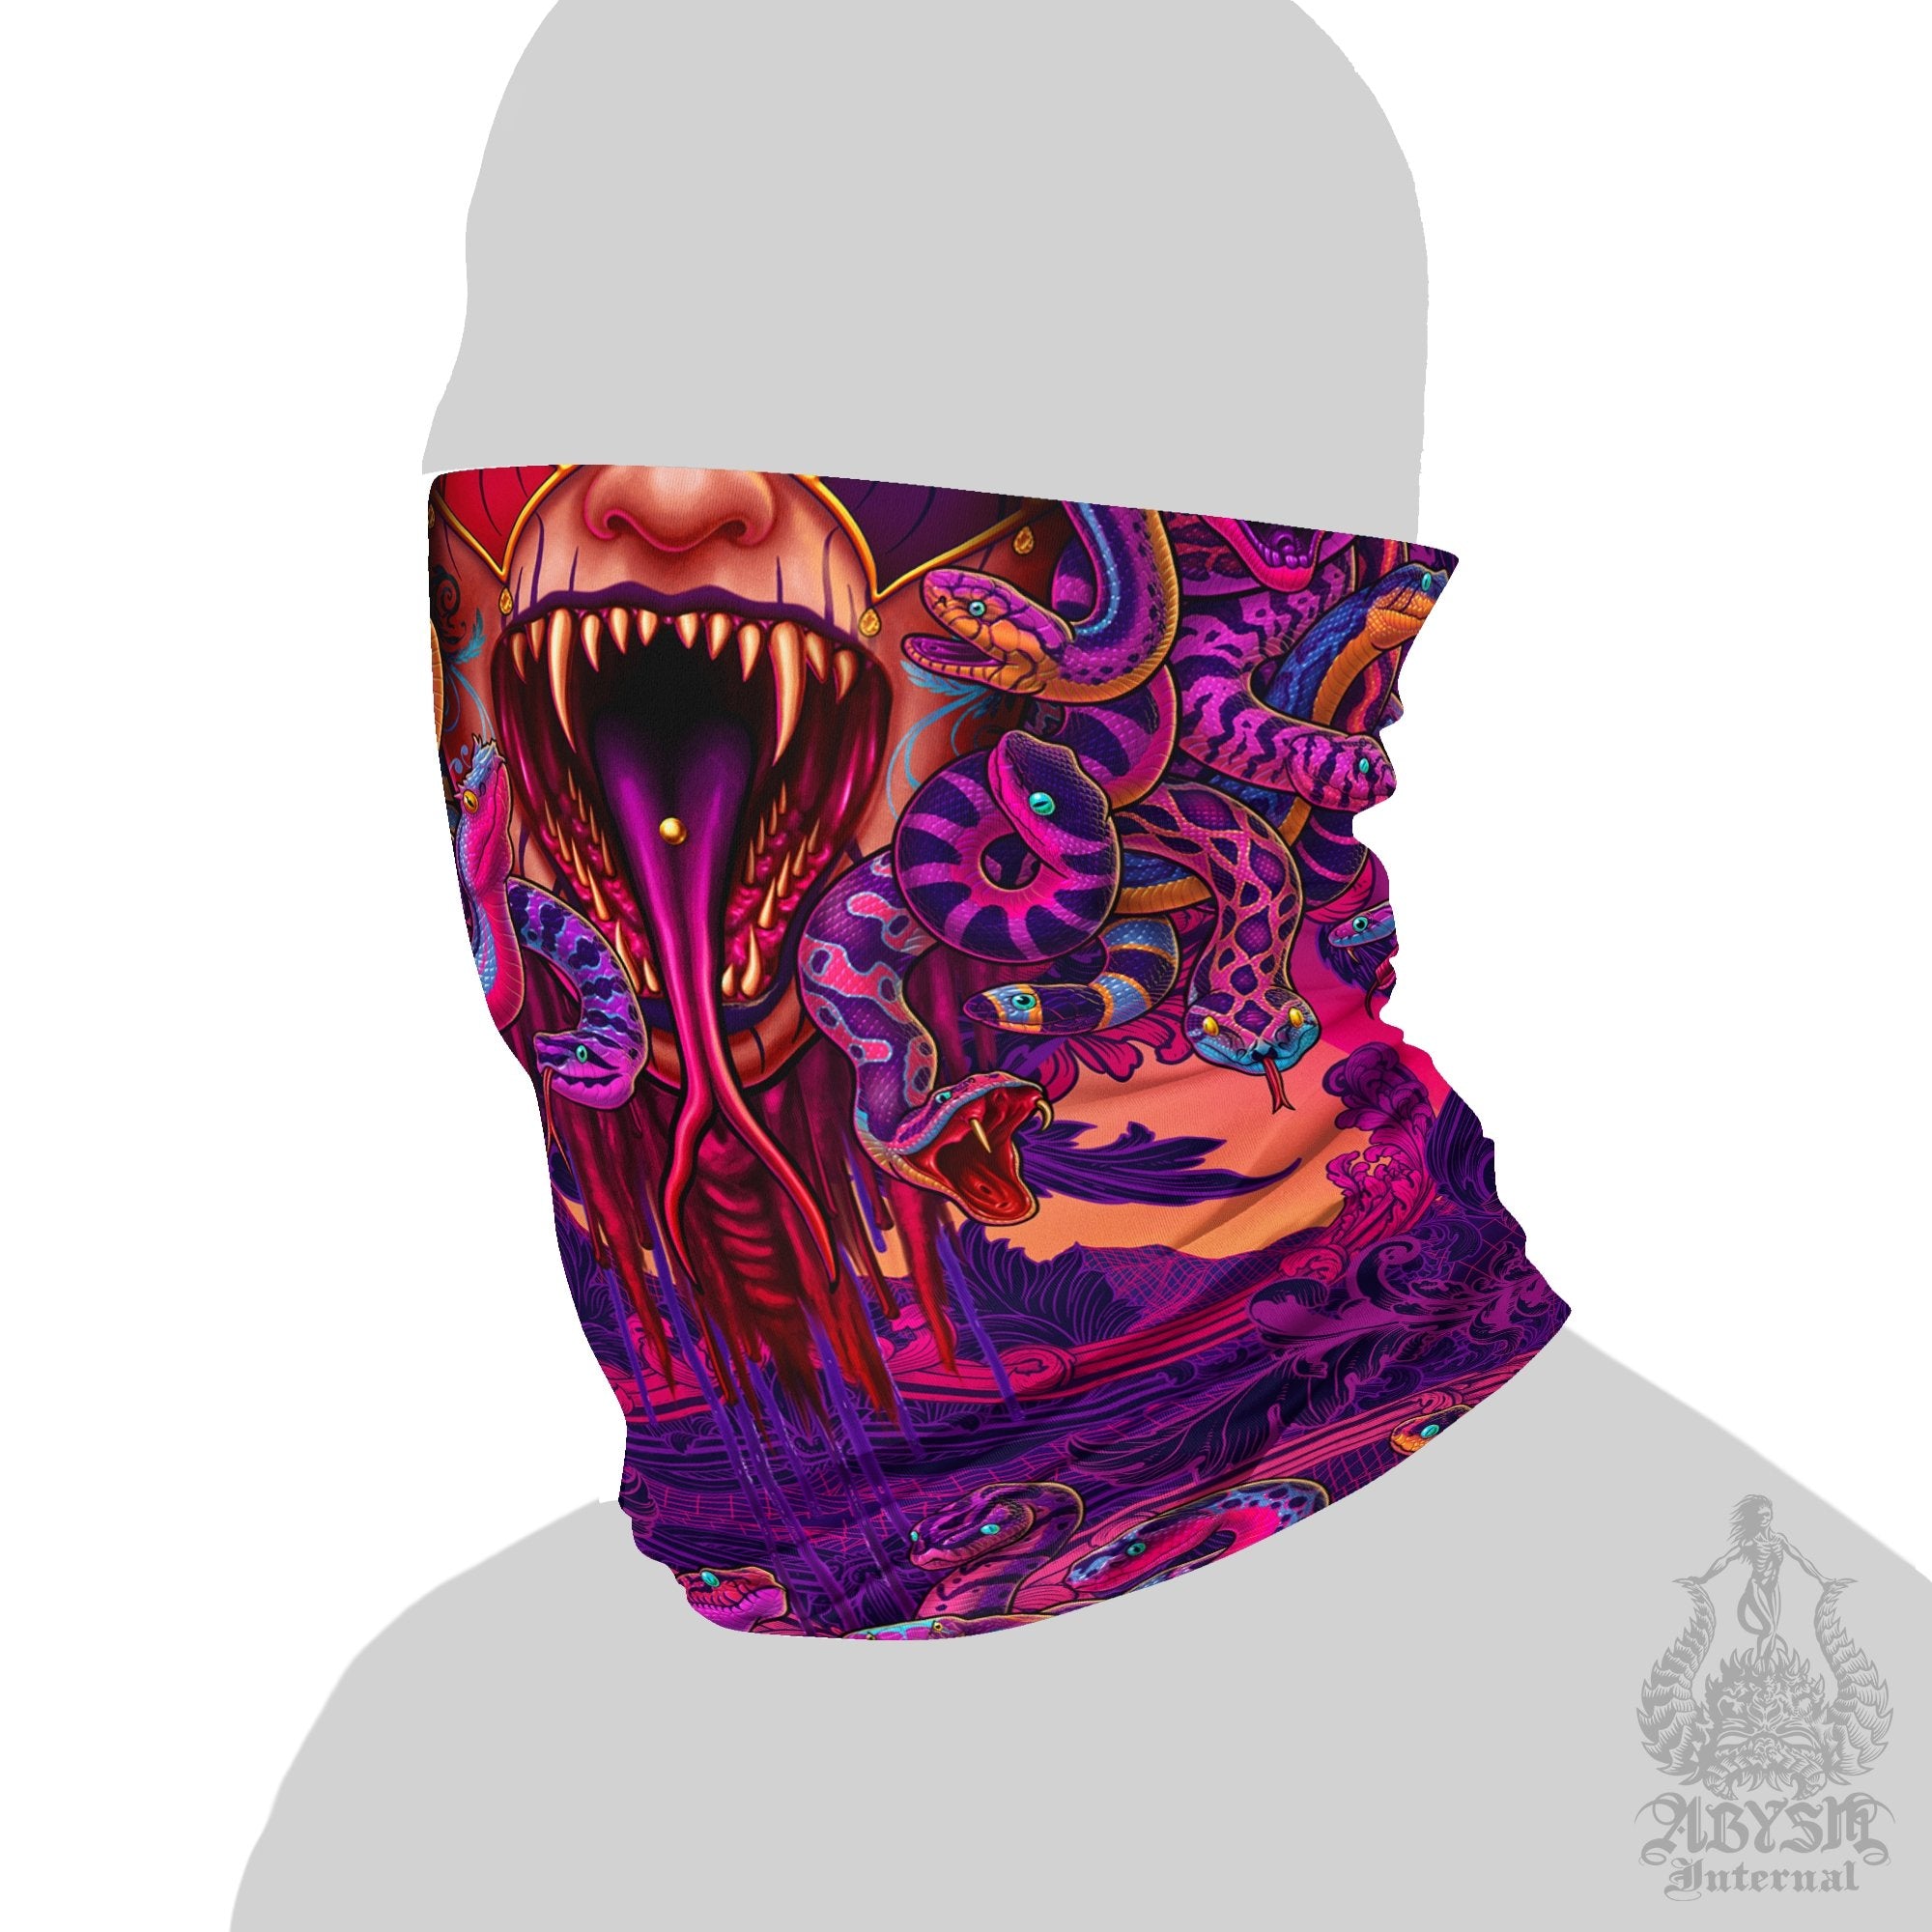 Medusa Neck Gaiter, Face Mask, Head Covering, Snakes Headband, Retrowave Skull, Vaporwave Outfit - Pastel Harlequin, 4 Face Options - Abysm Internal